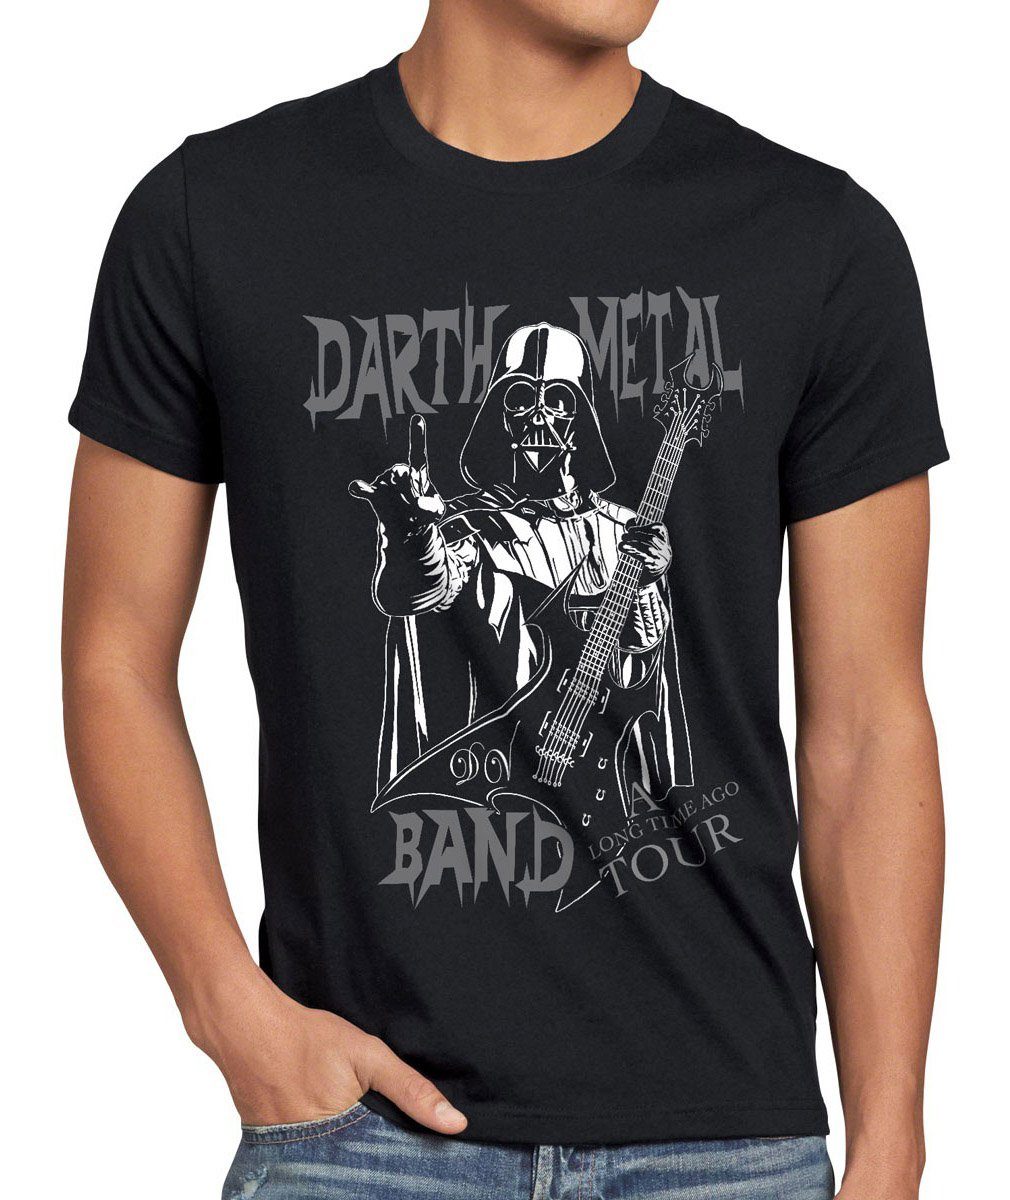 style3 Print-Shirt Herren rock jedi star Darth skywalker wars schwarz us yoda vader Metal T-Shirt luke Band